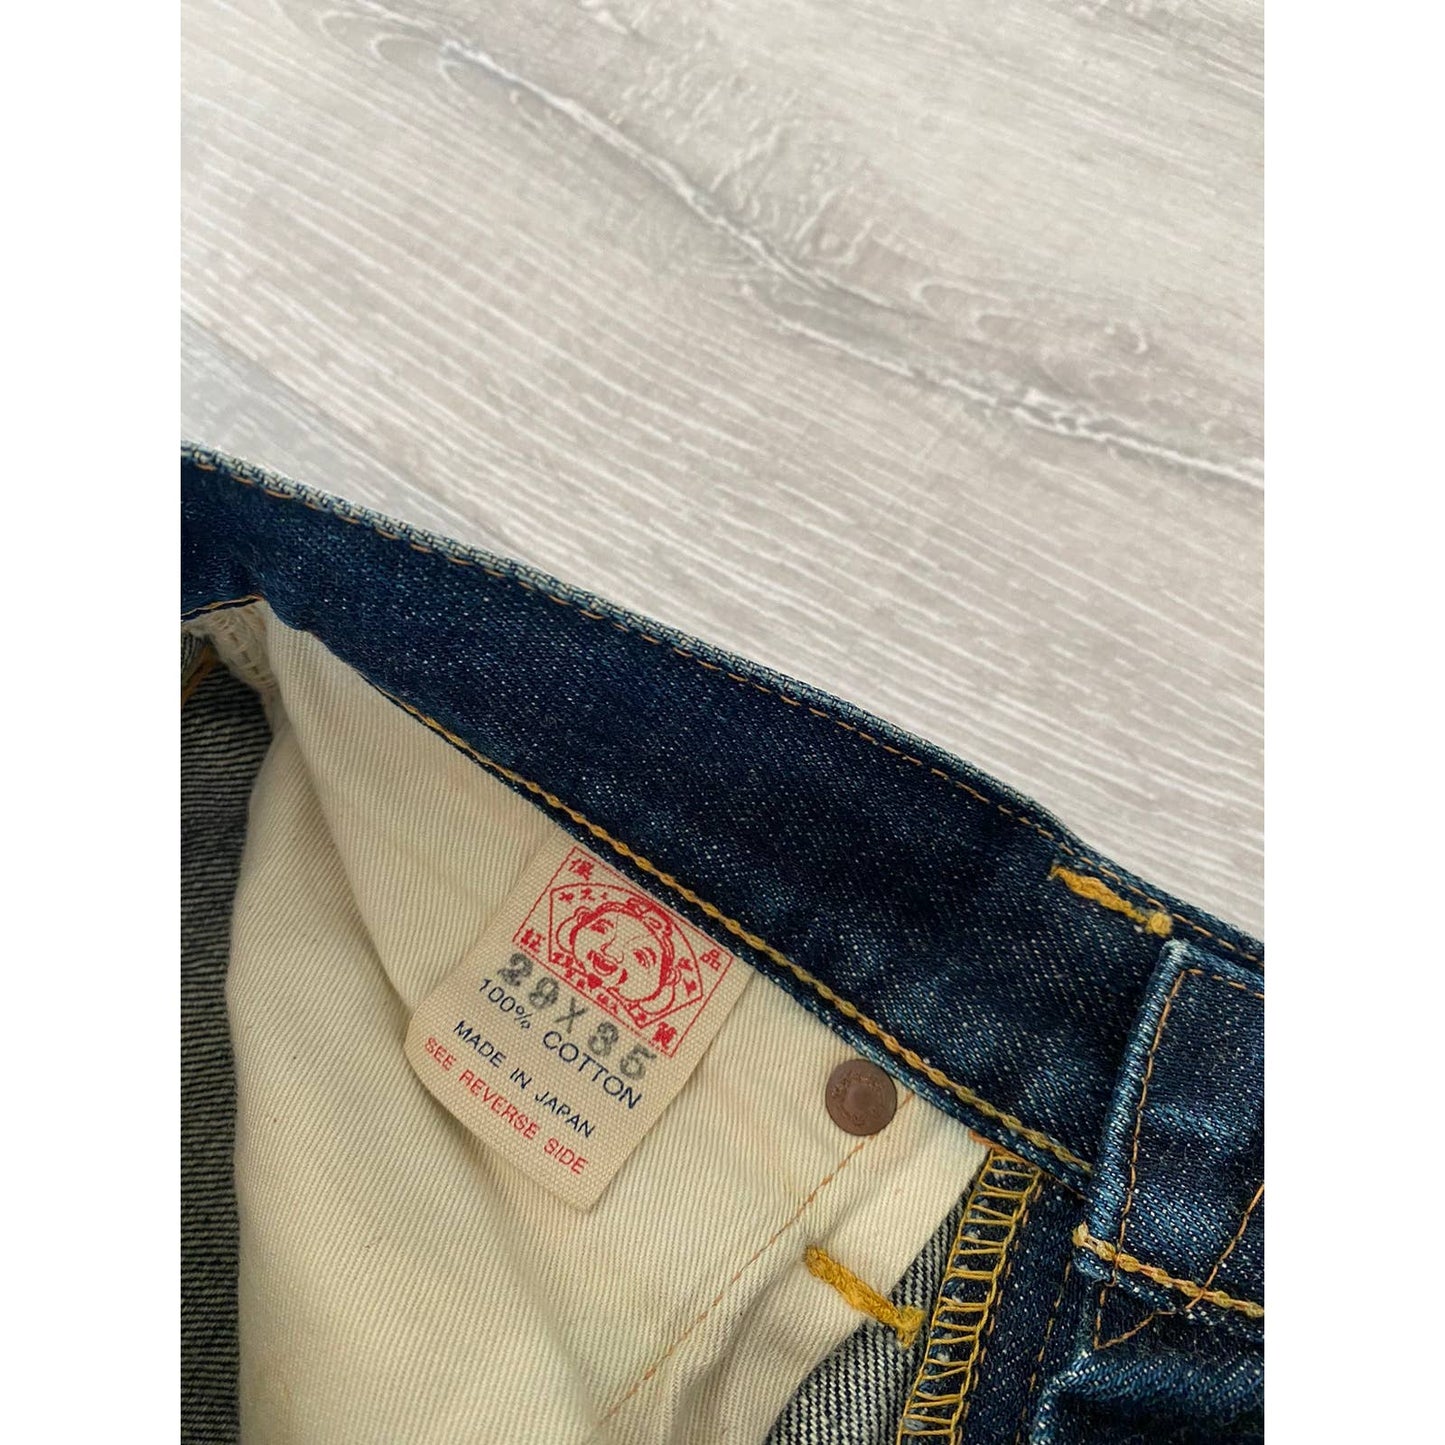 Evisu jeans vintage navy white seagull selvedge Yamane Japan